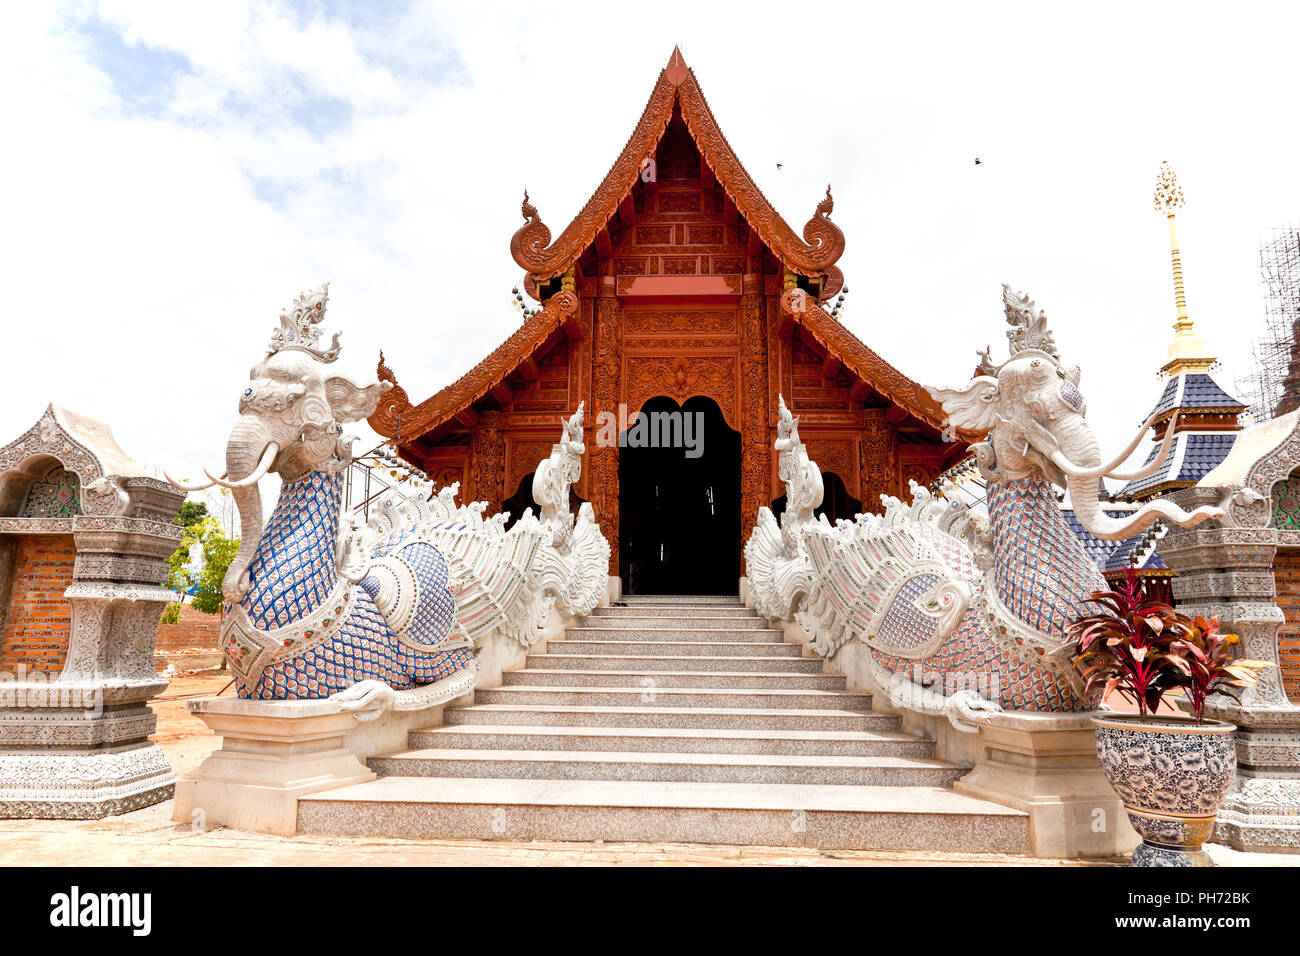 Lanna style buddhist temple in thailand Stock Photo